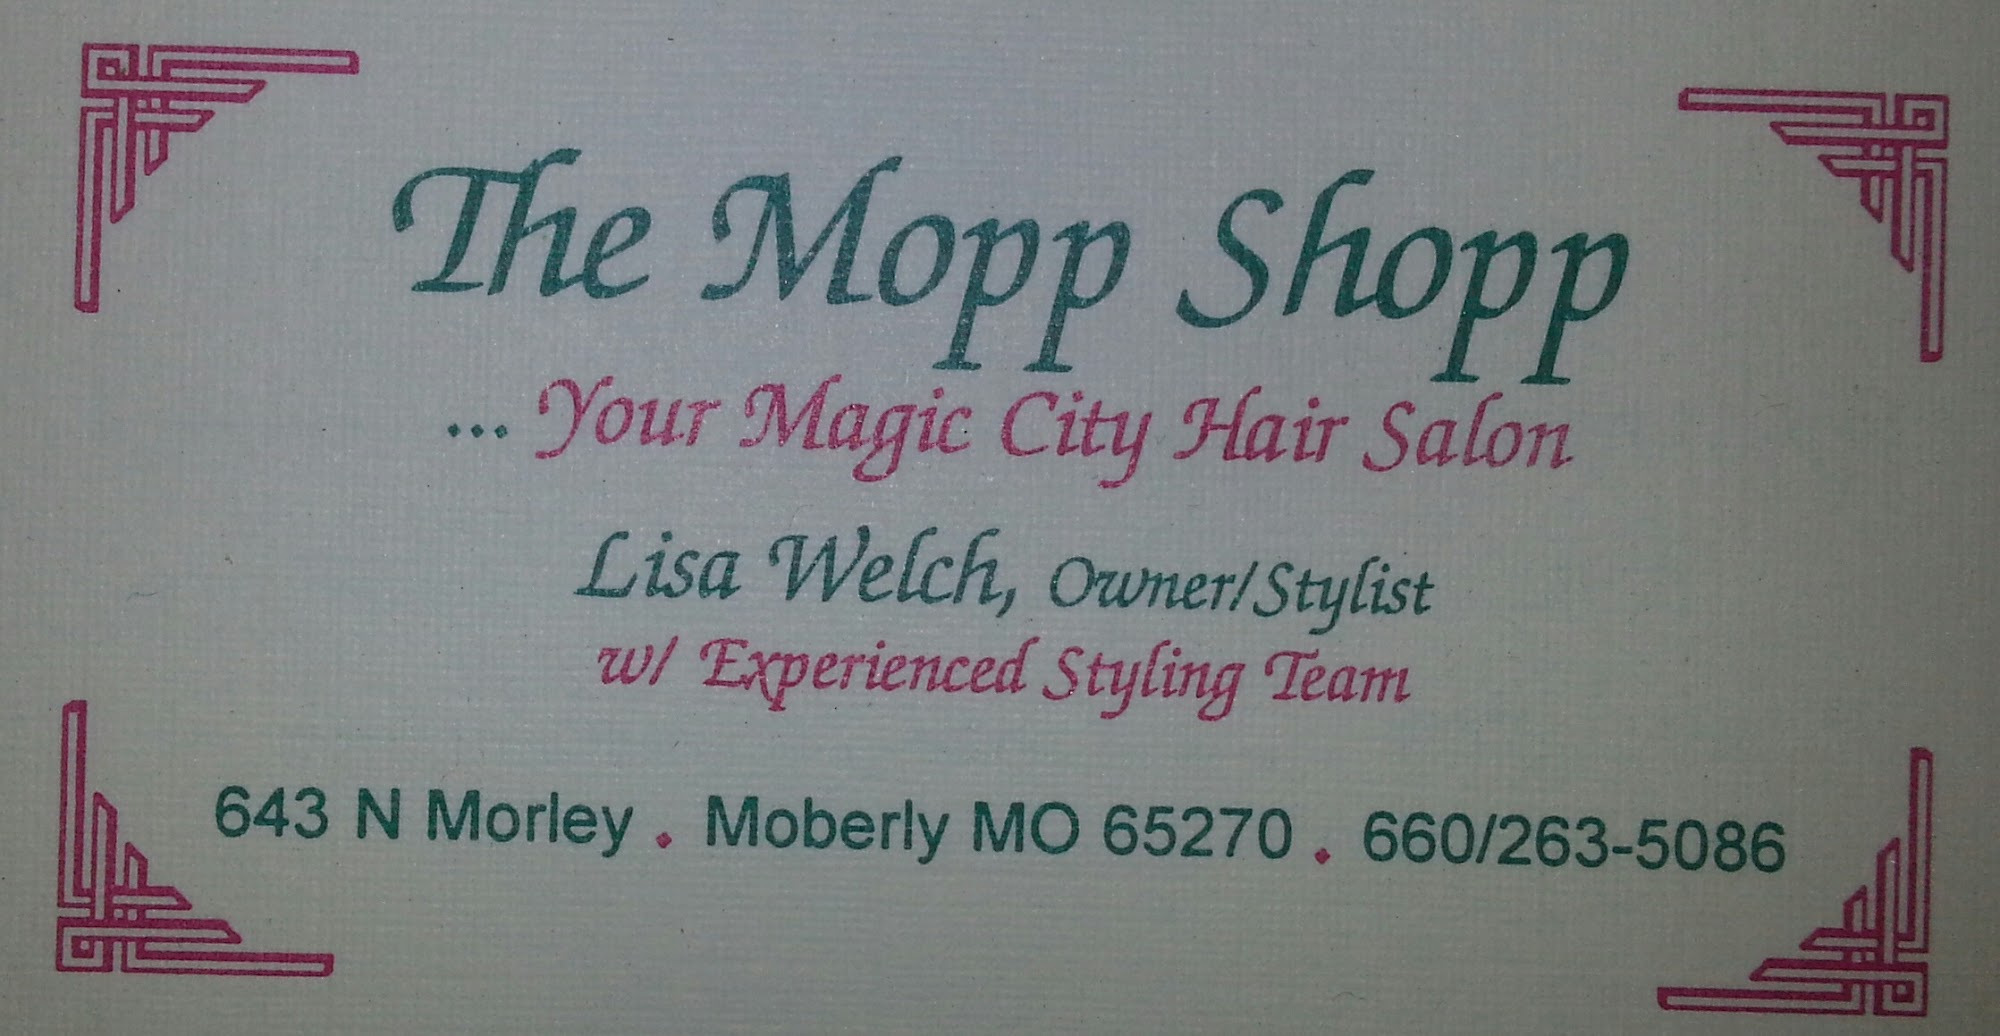 The Mopp Shopp 643 N Morley St # G, Moberly Missouri 65270